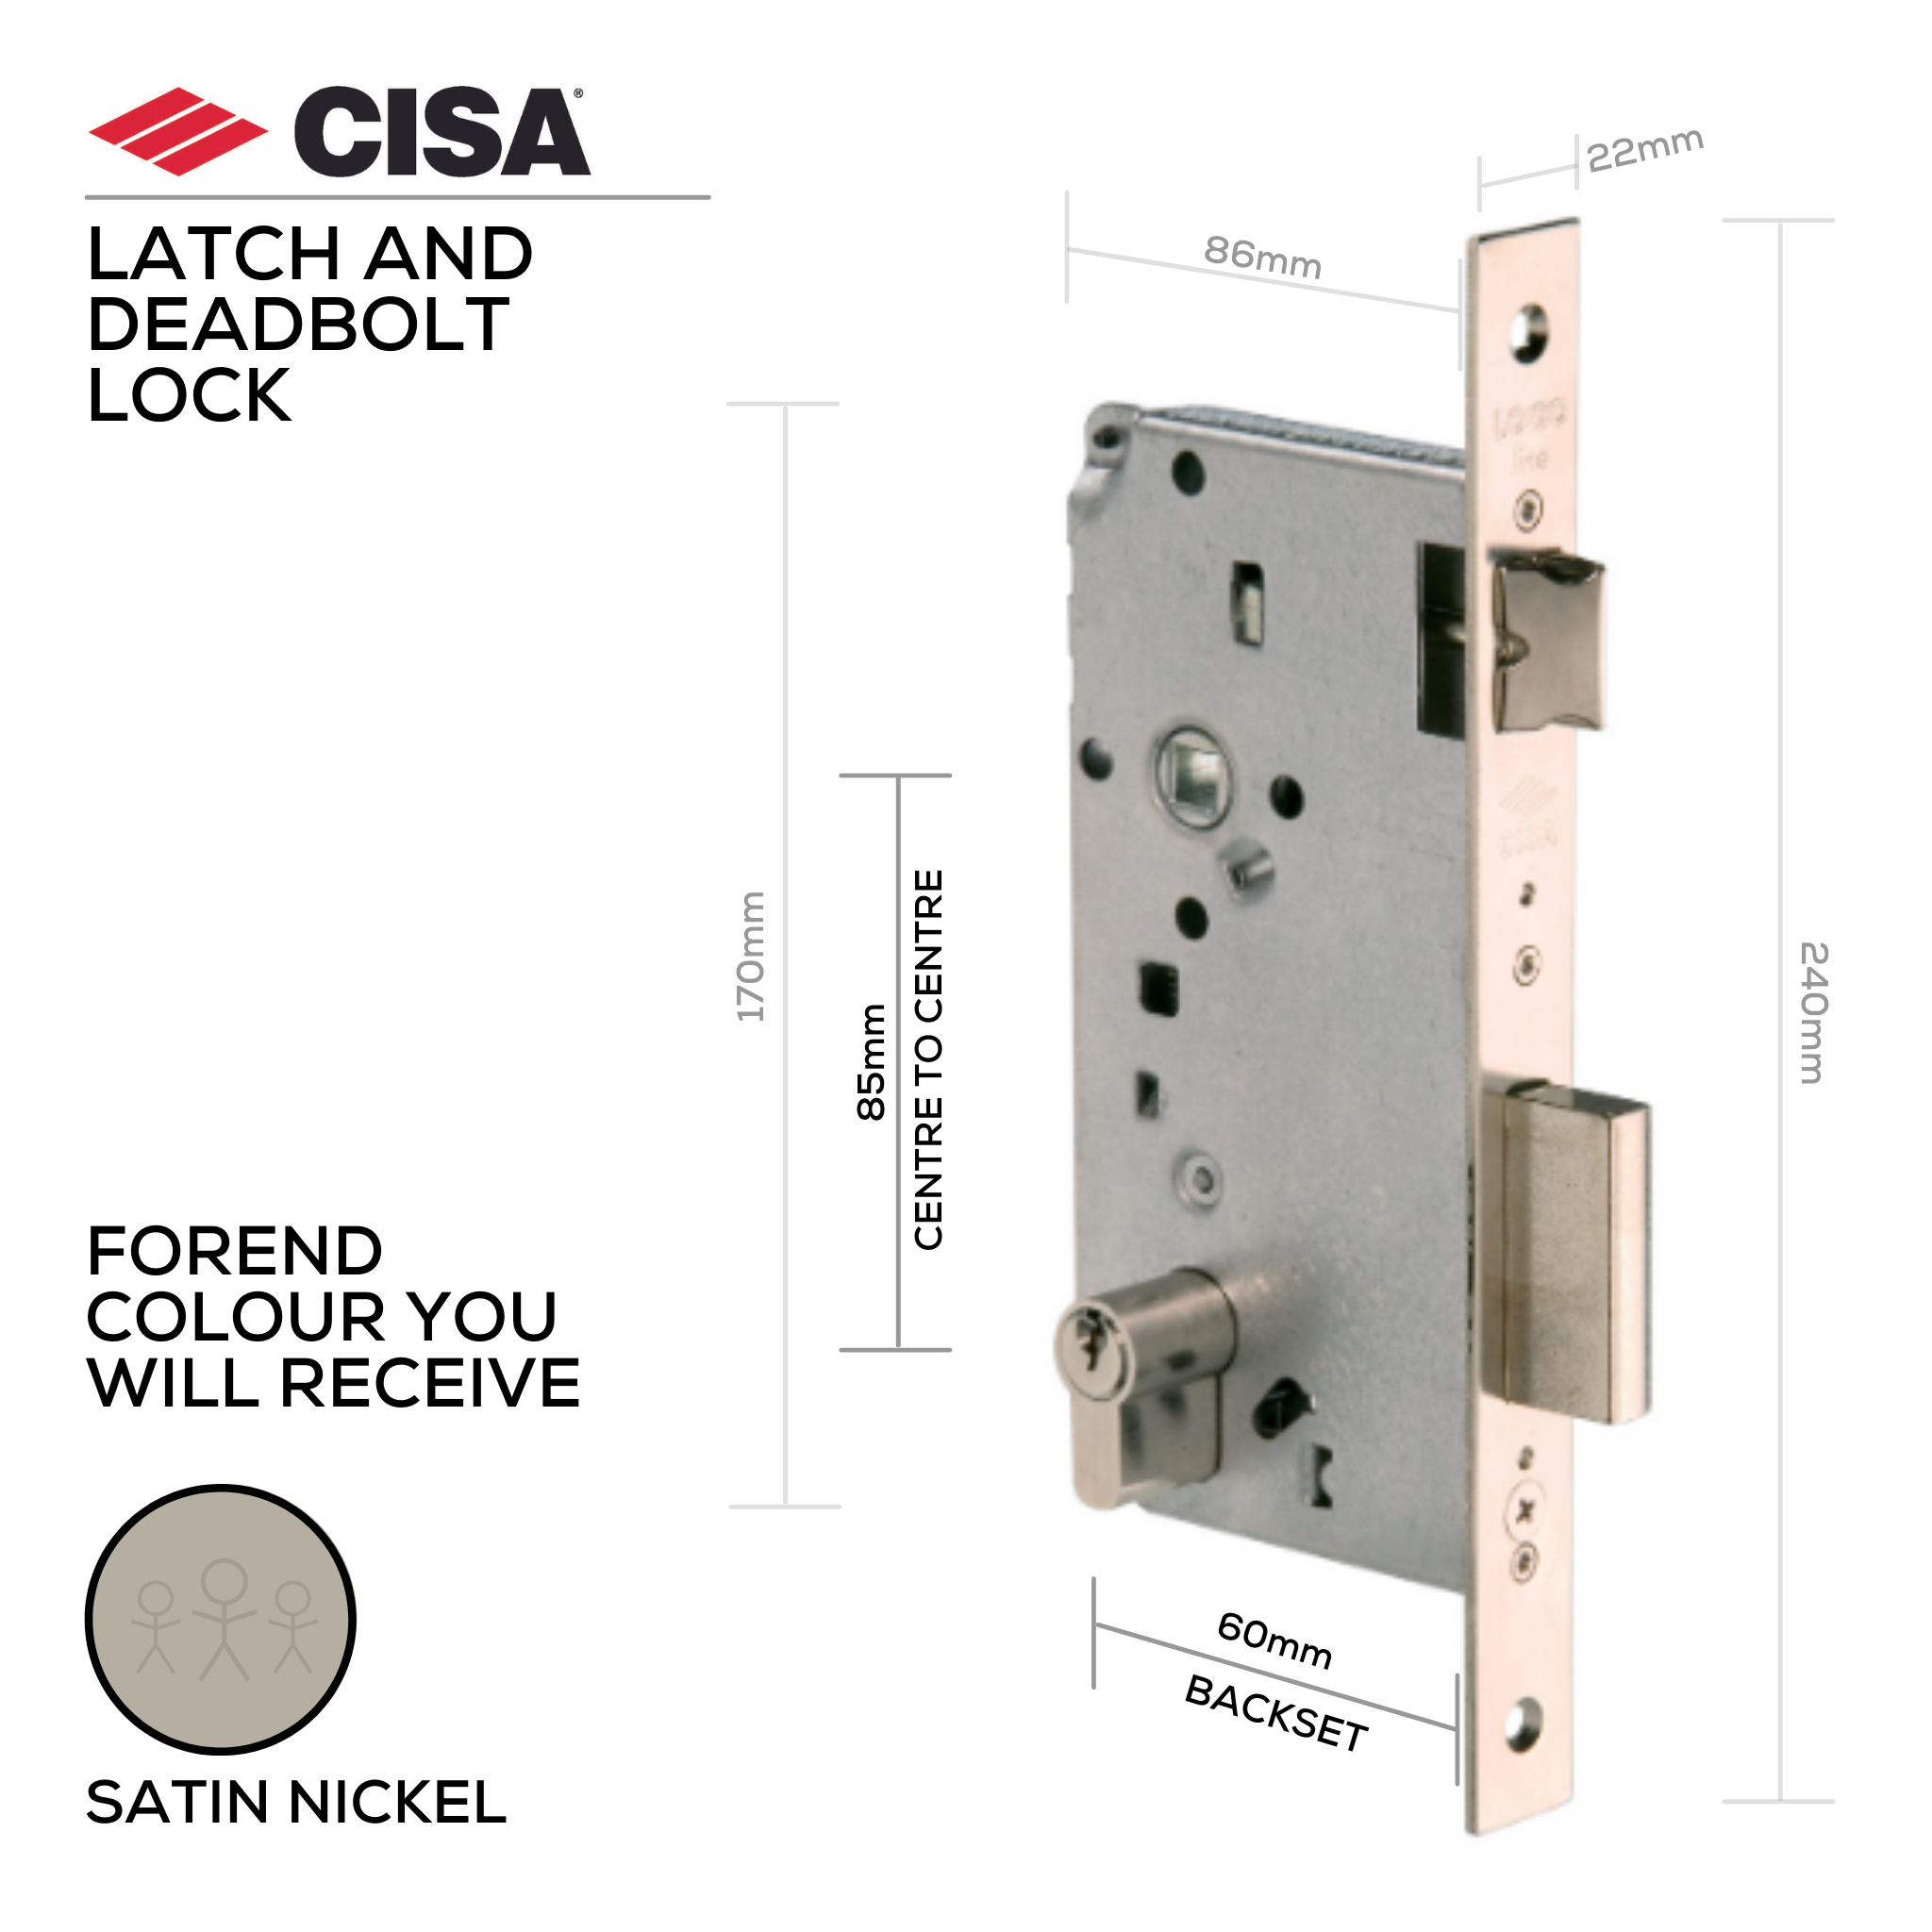 5C611-60-12, Latch & Deadbolt Lock, Euro Cylinder, Excluding Cylinder, 60mm (Backset), 85mm (ctc), Satin Nickel, CISA